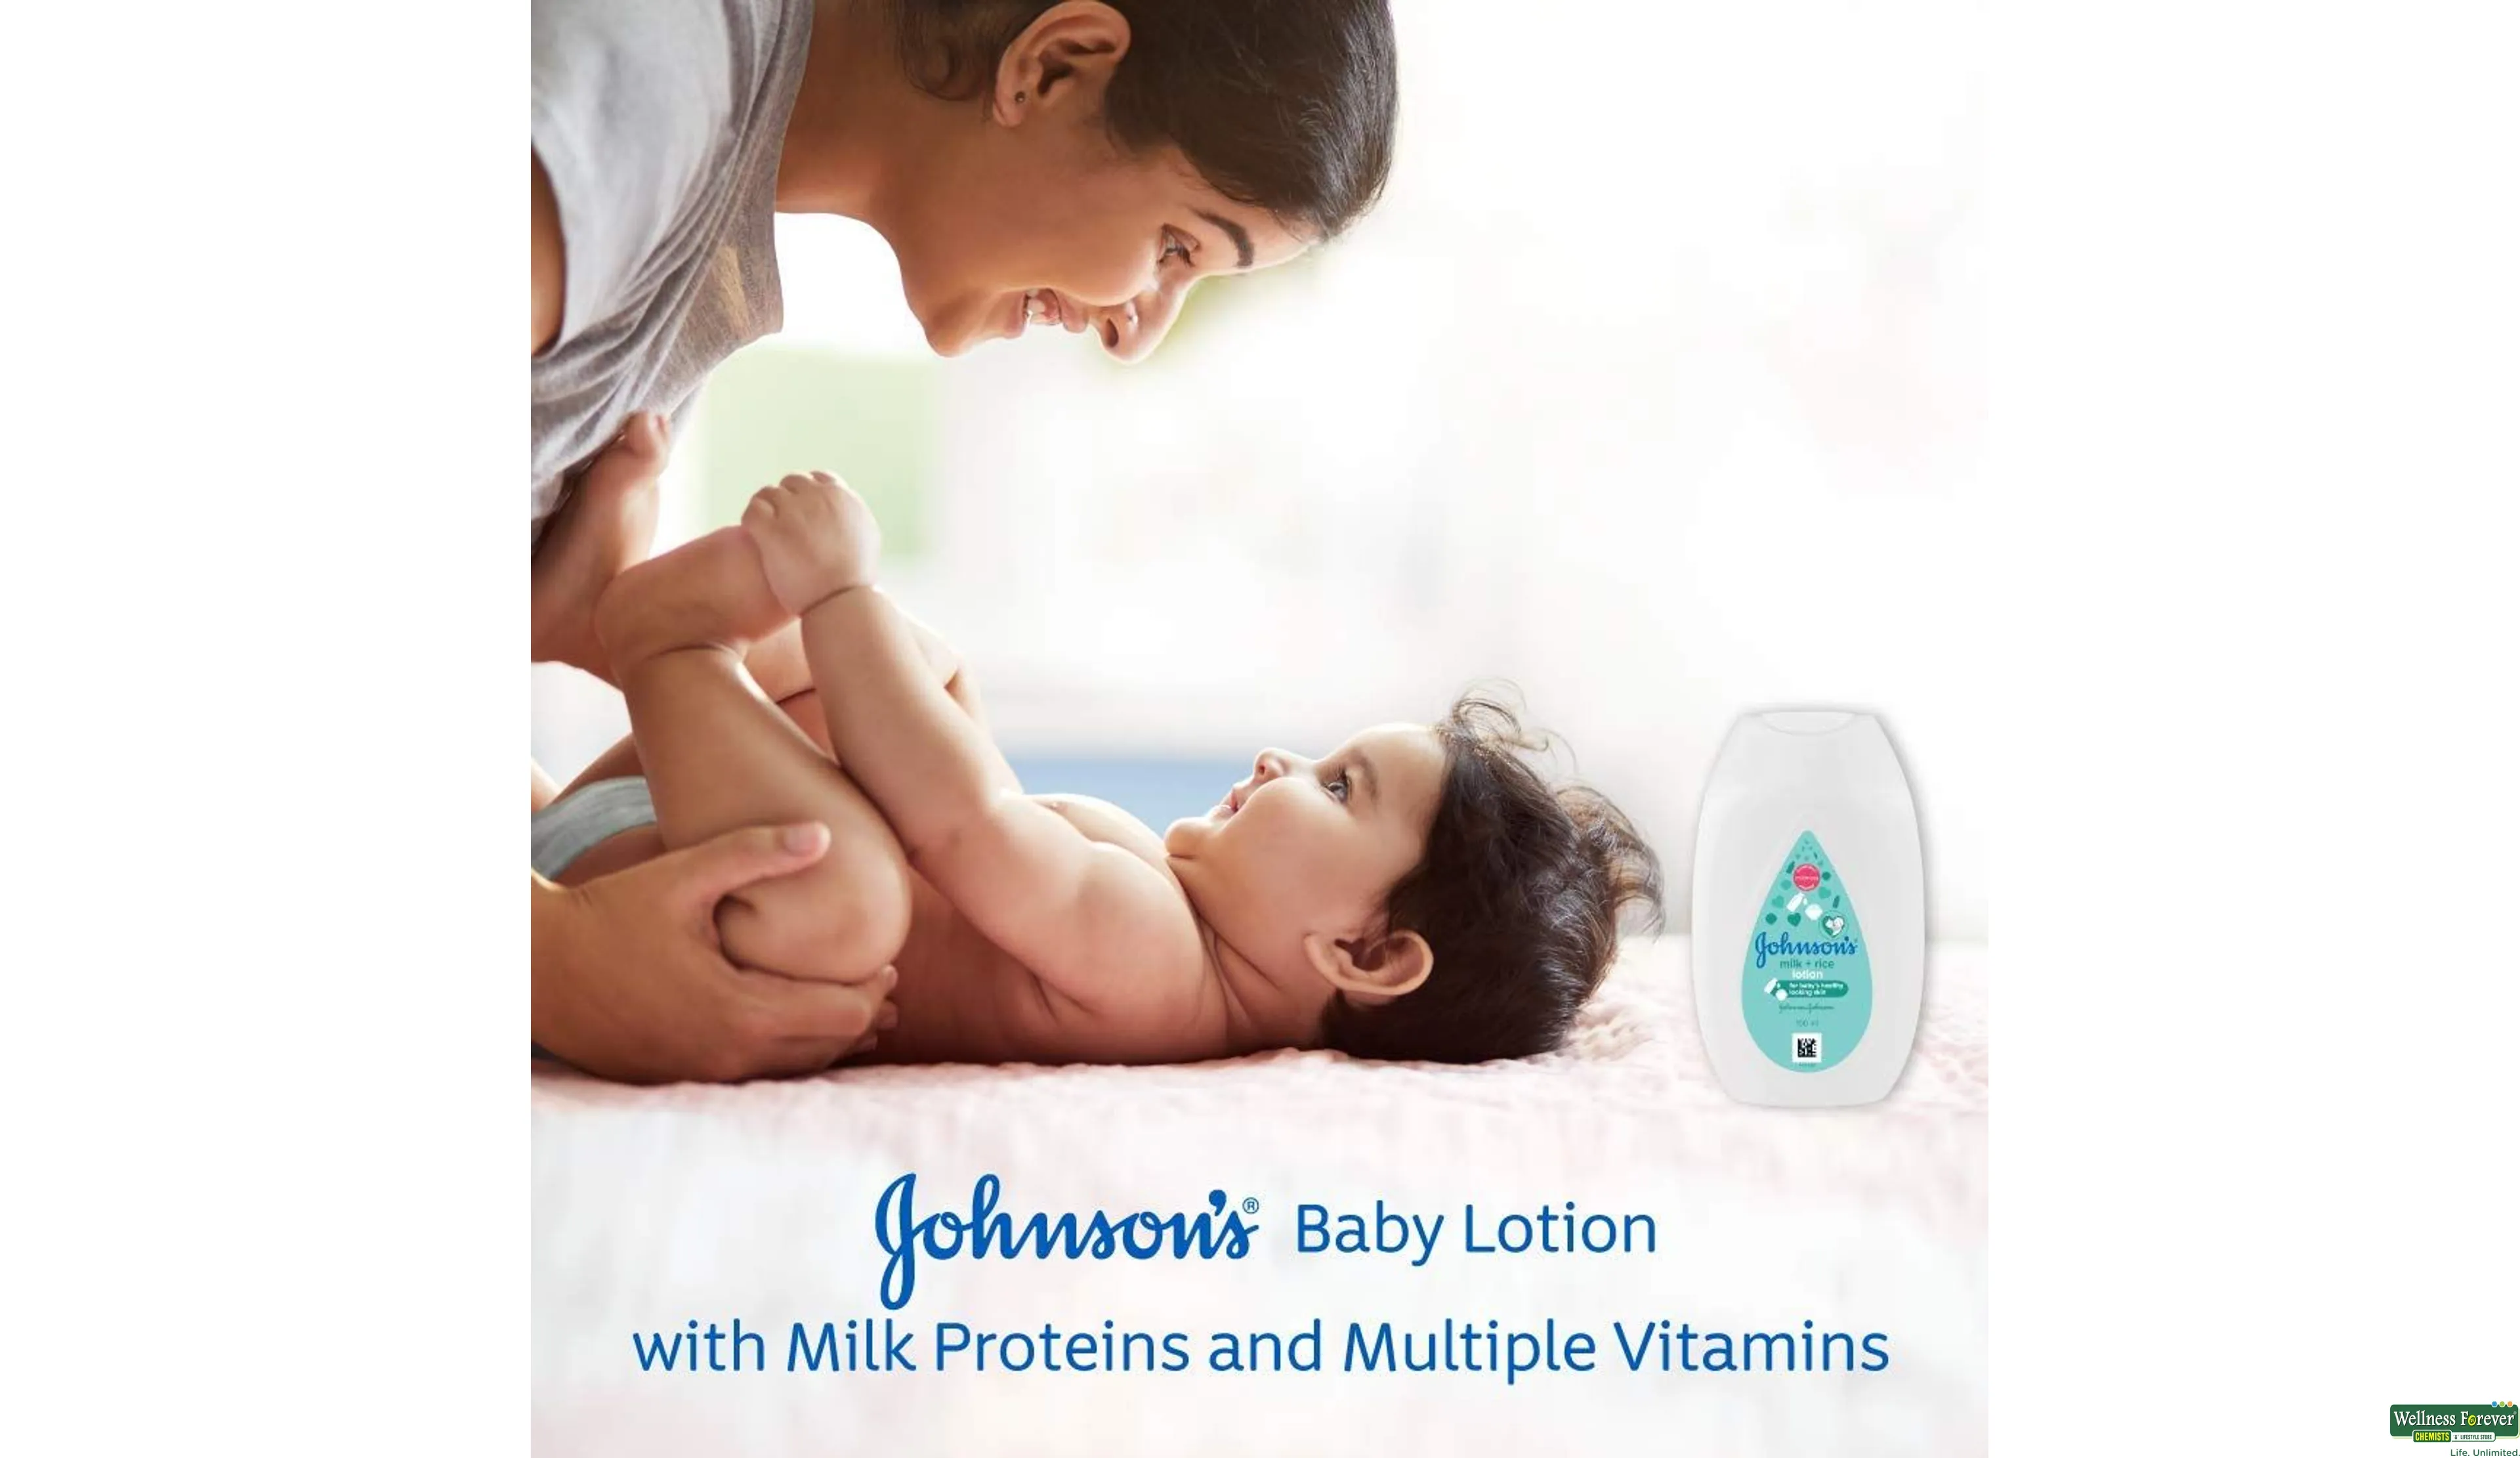 Johnson's Baby Milk + Rice Lotion (200Ml) White